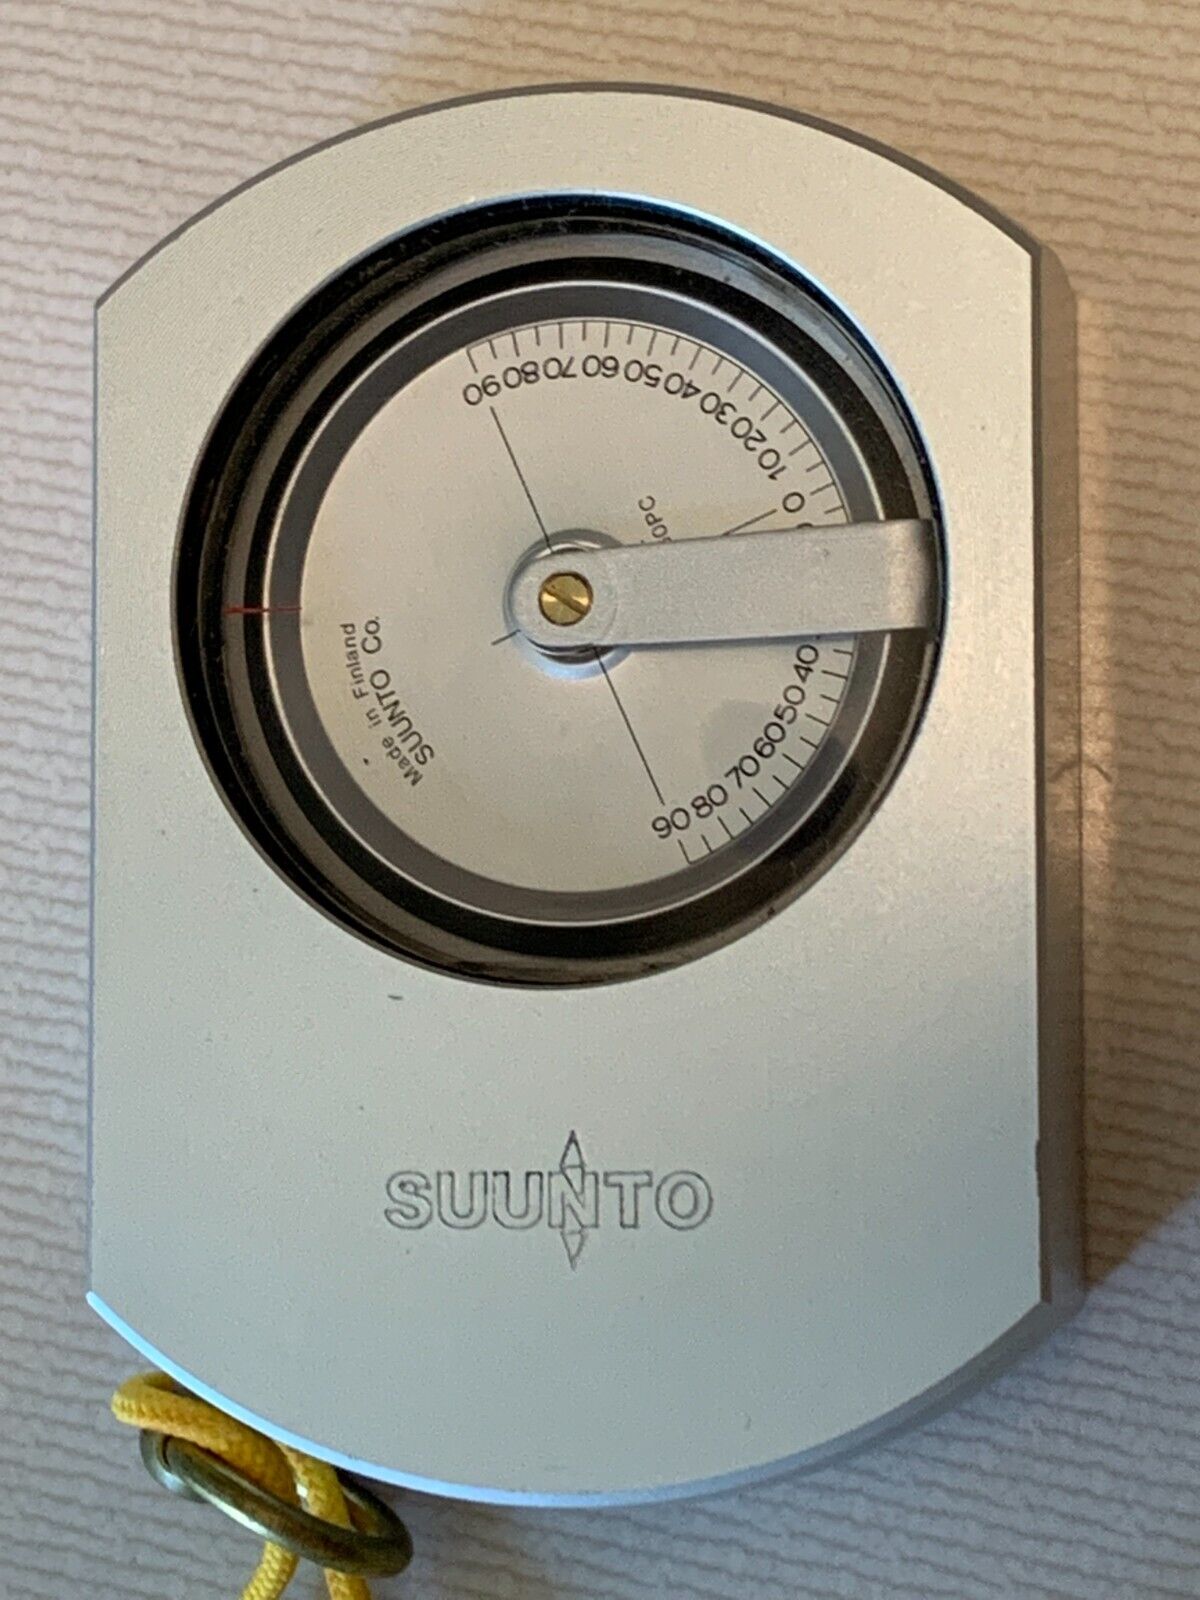 Suunto Finland Pm-5/360 Pc Clinometer Surveying Precision Instrument Vintage